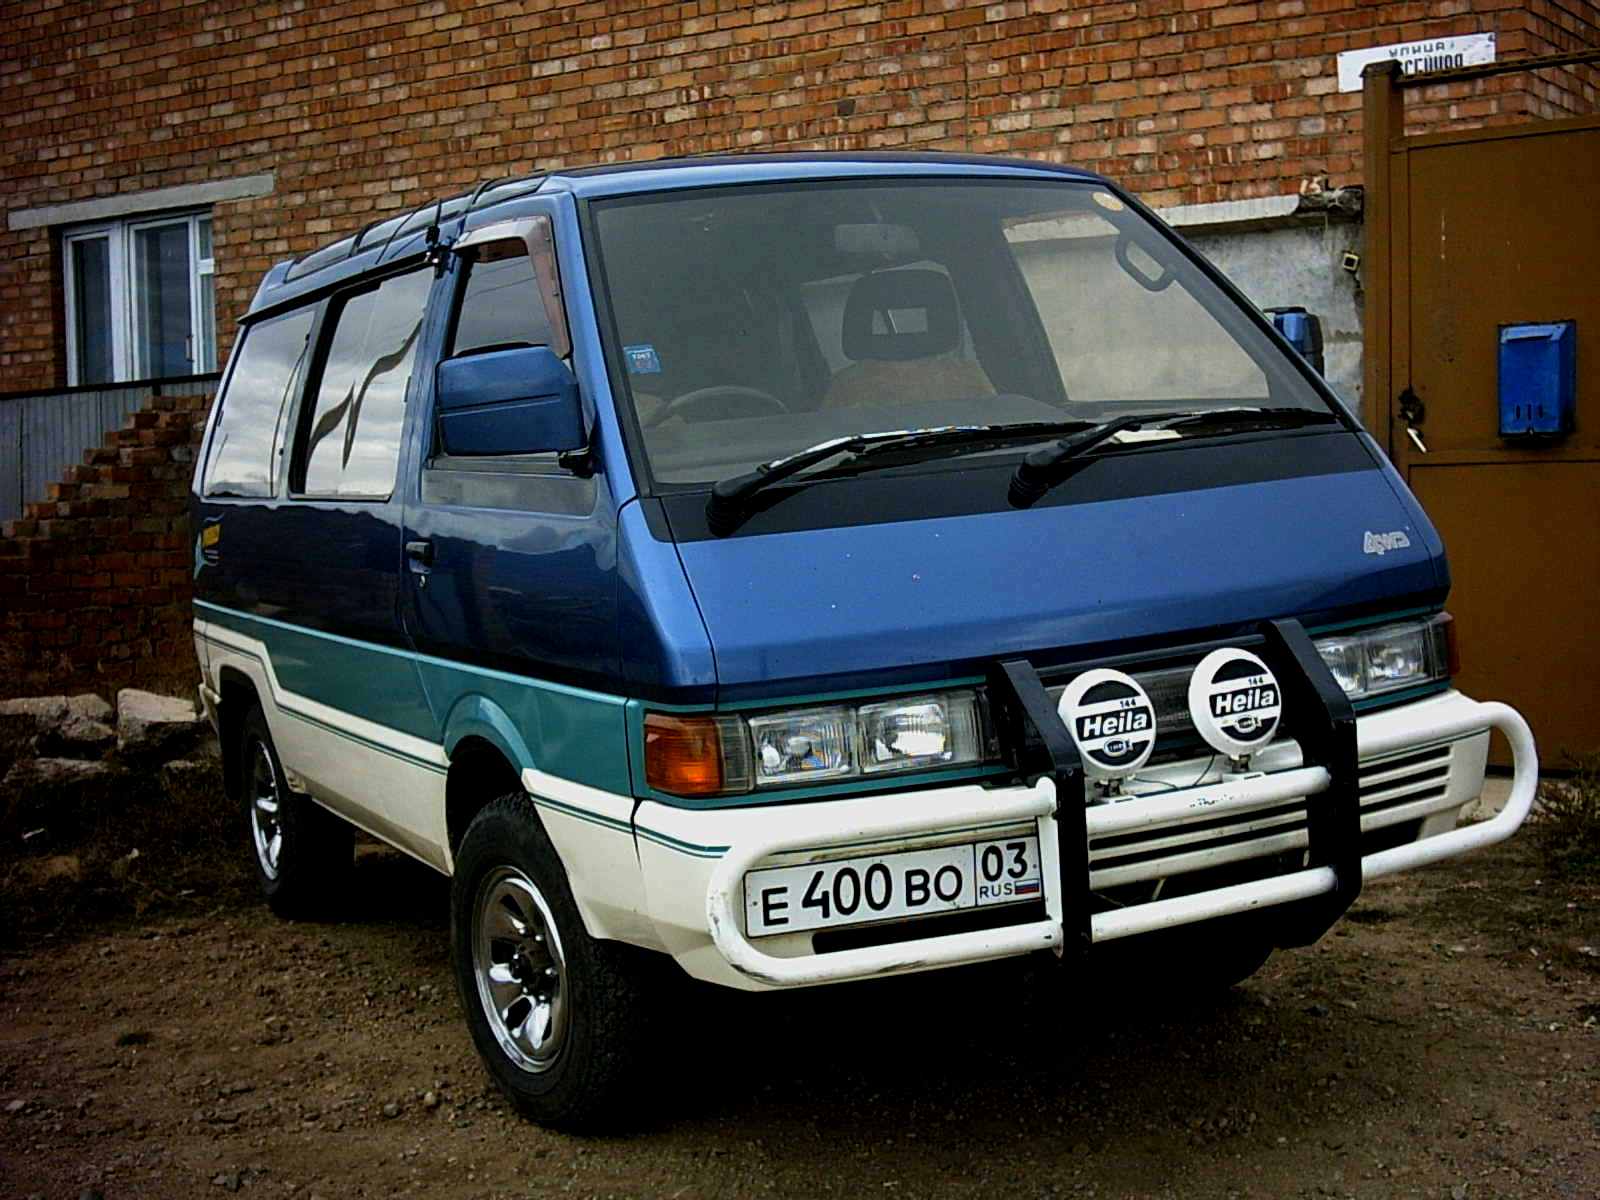 1990 Nissan Largo